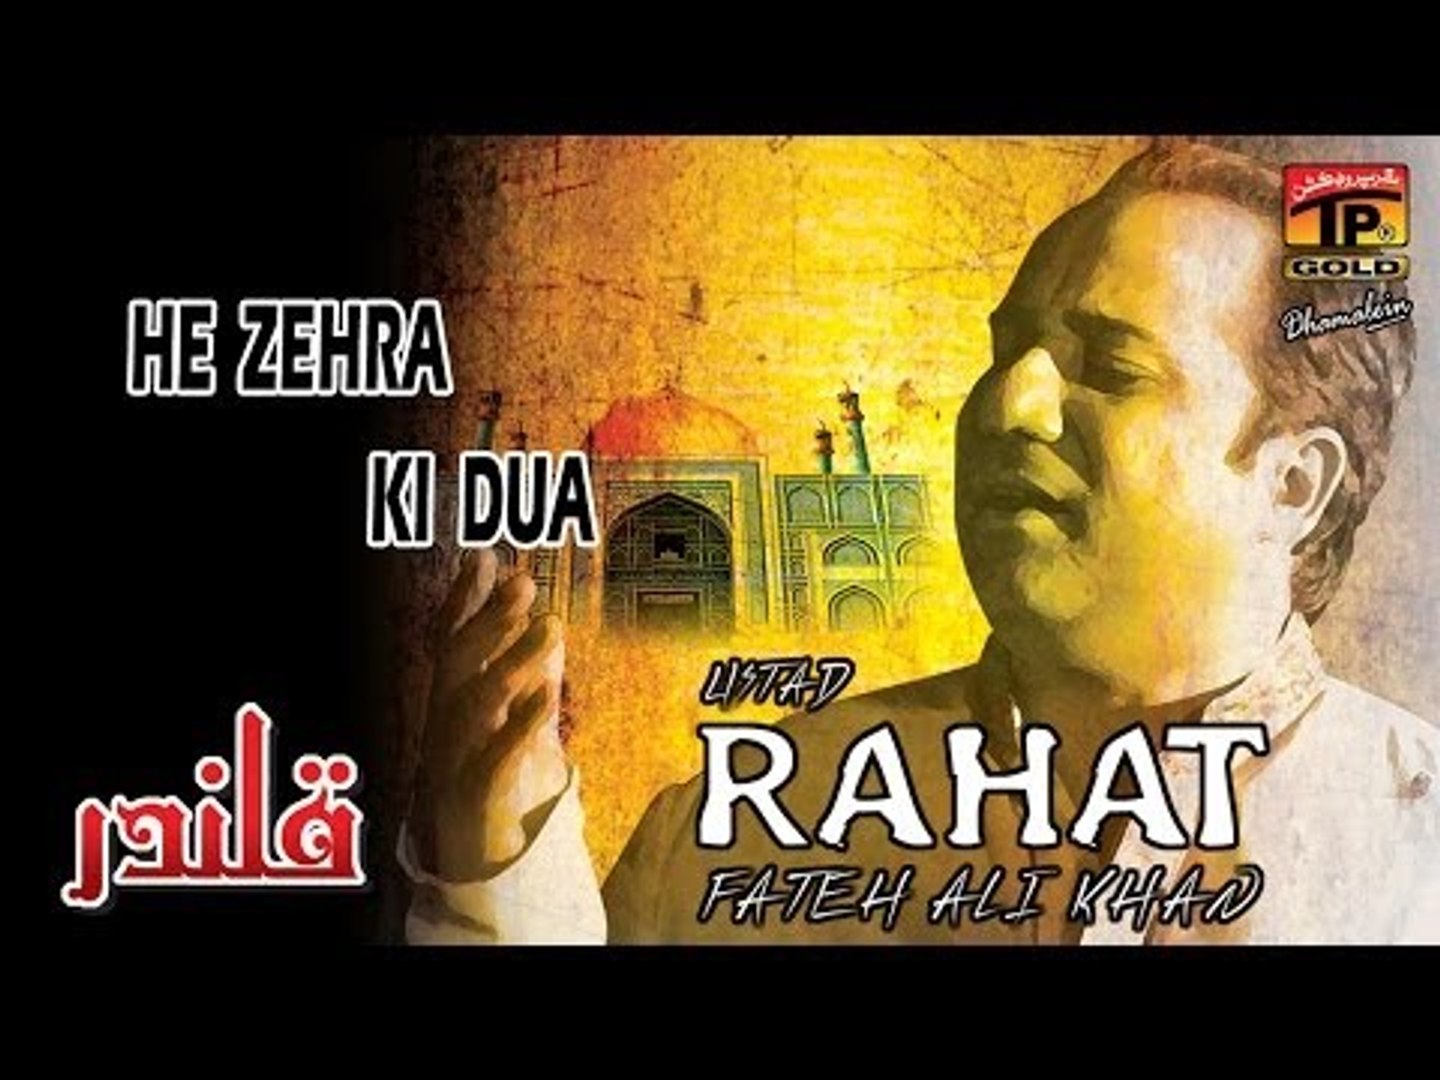 Rahat Fateh Ali Khan - He Zehra Ki Dua